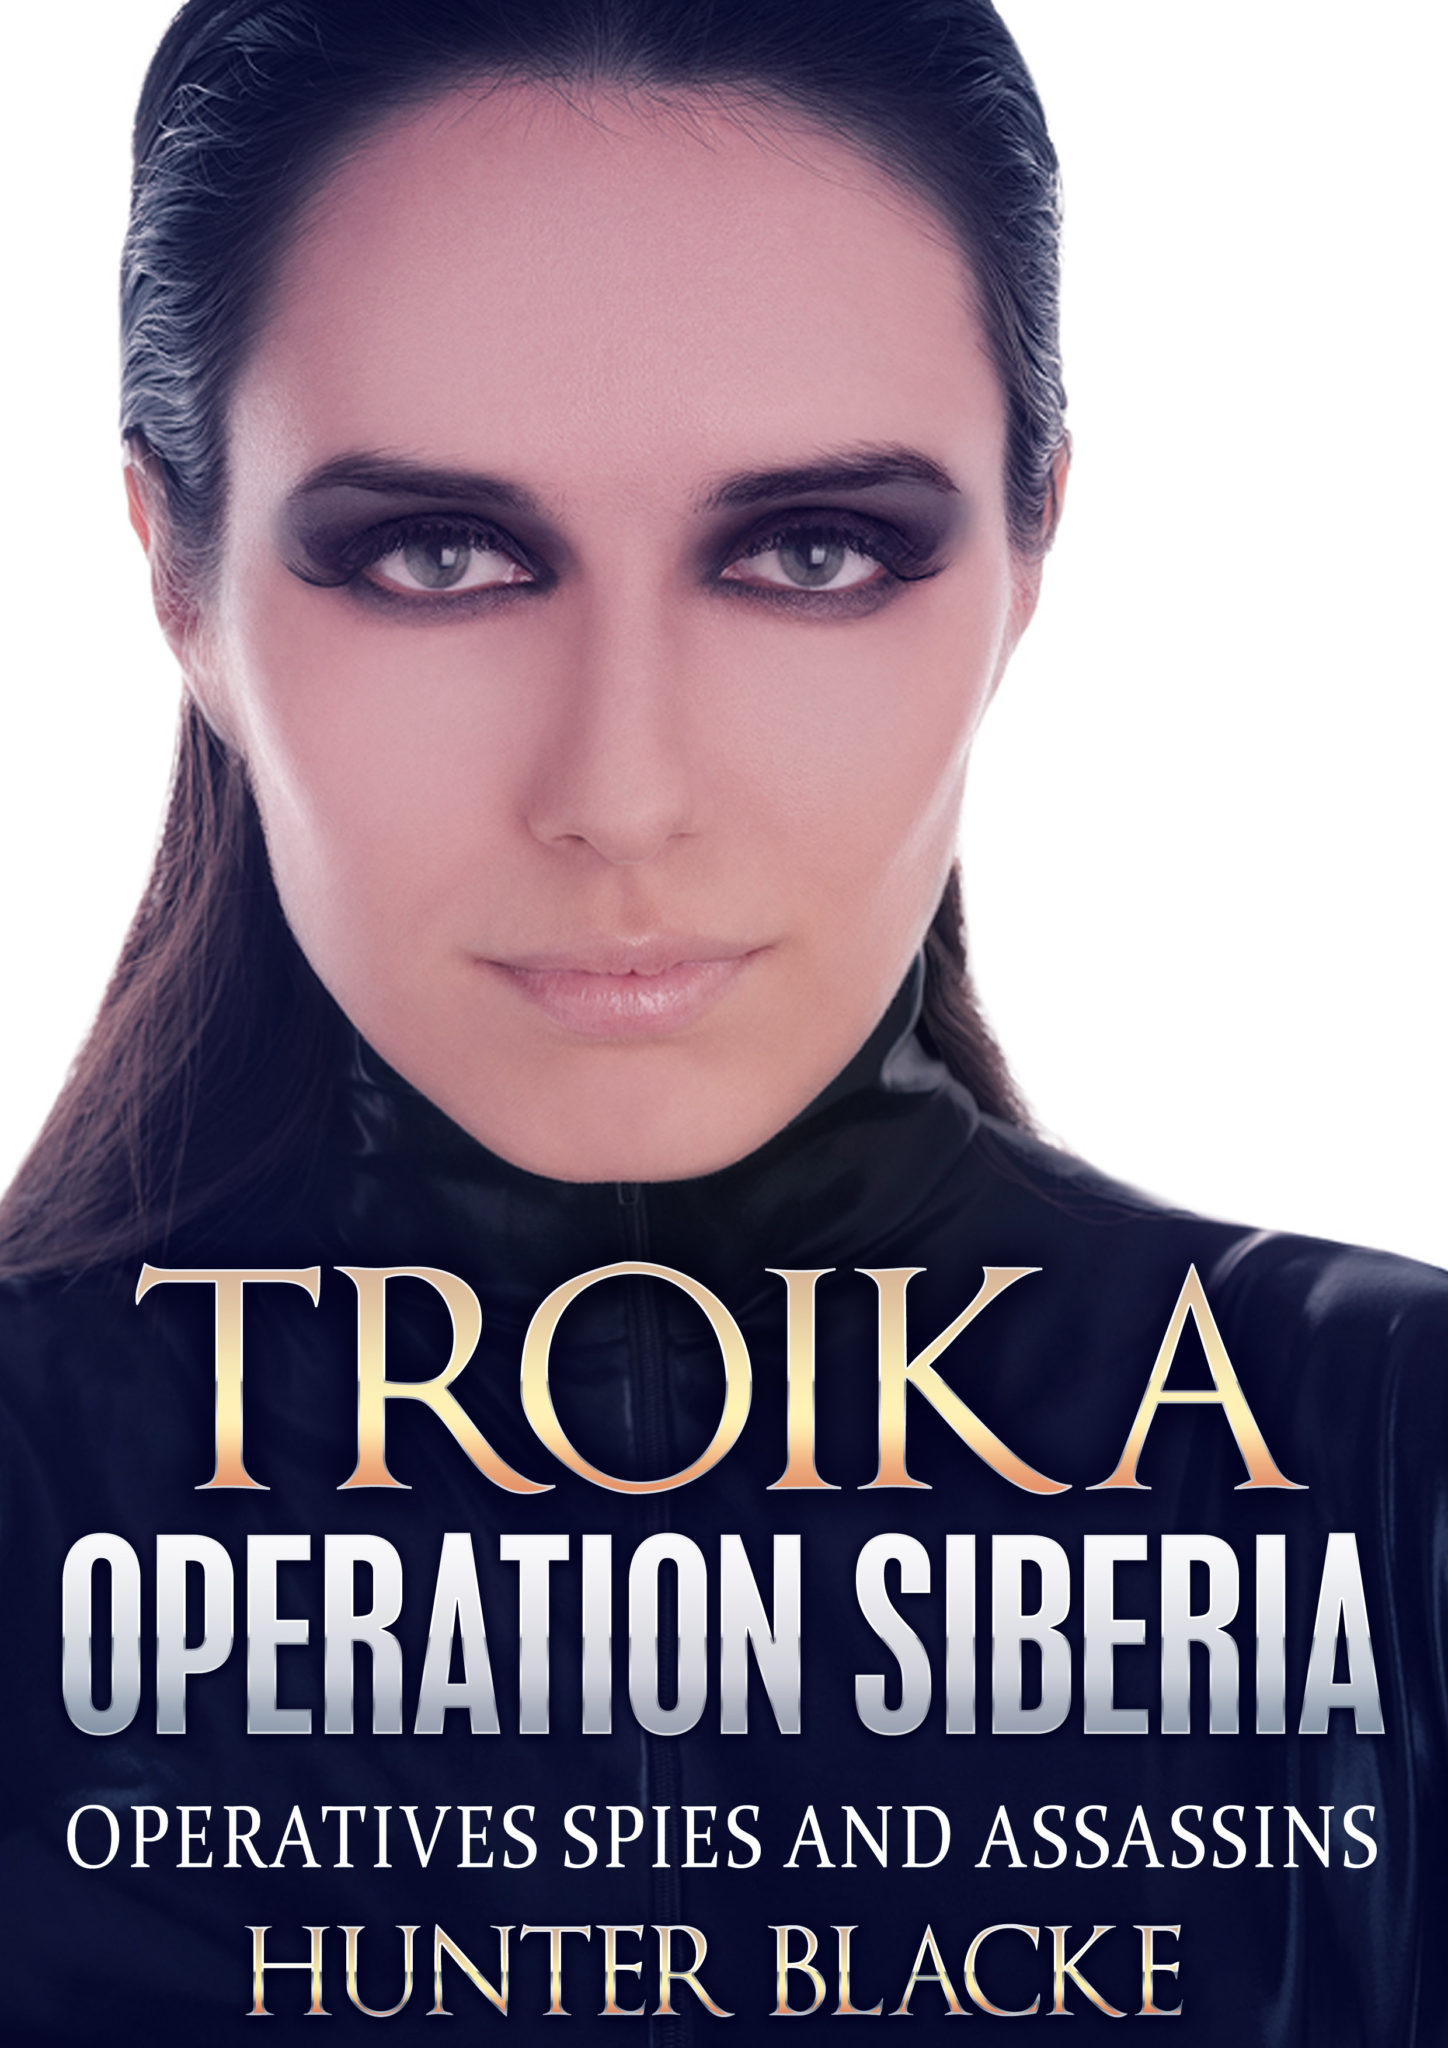 FREE: Troika – Opeation Siberia by Hunter Blacke